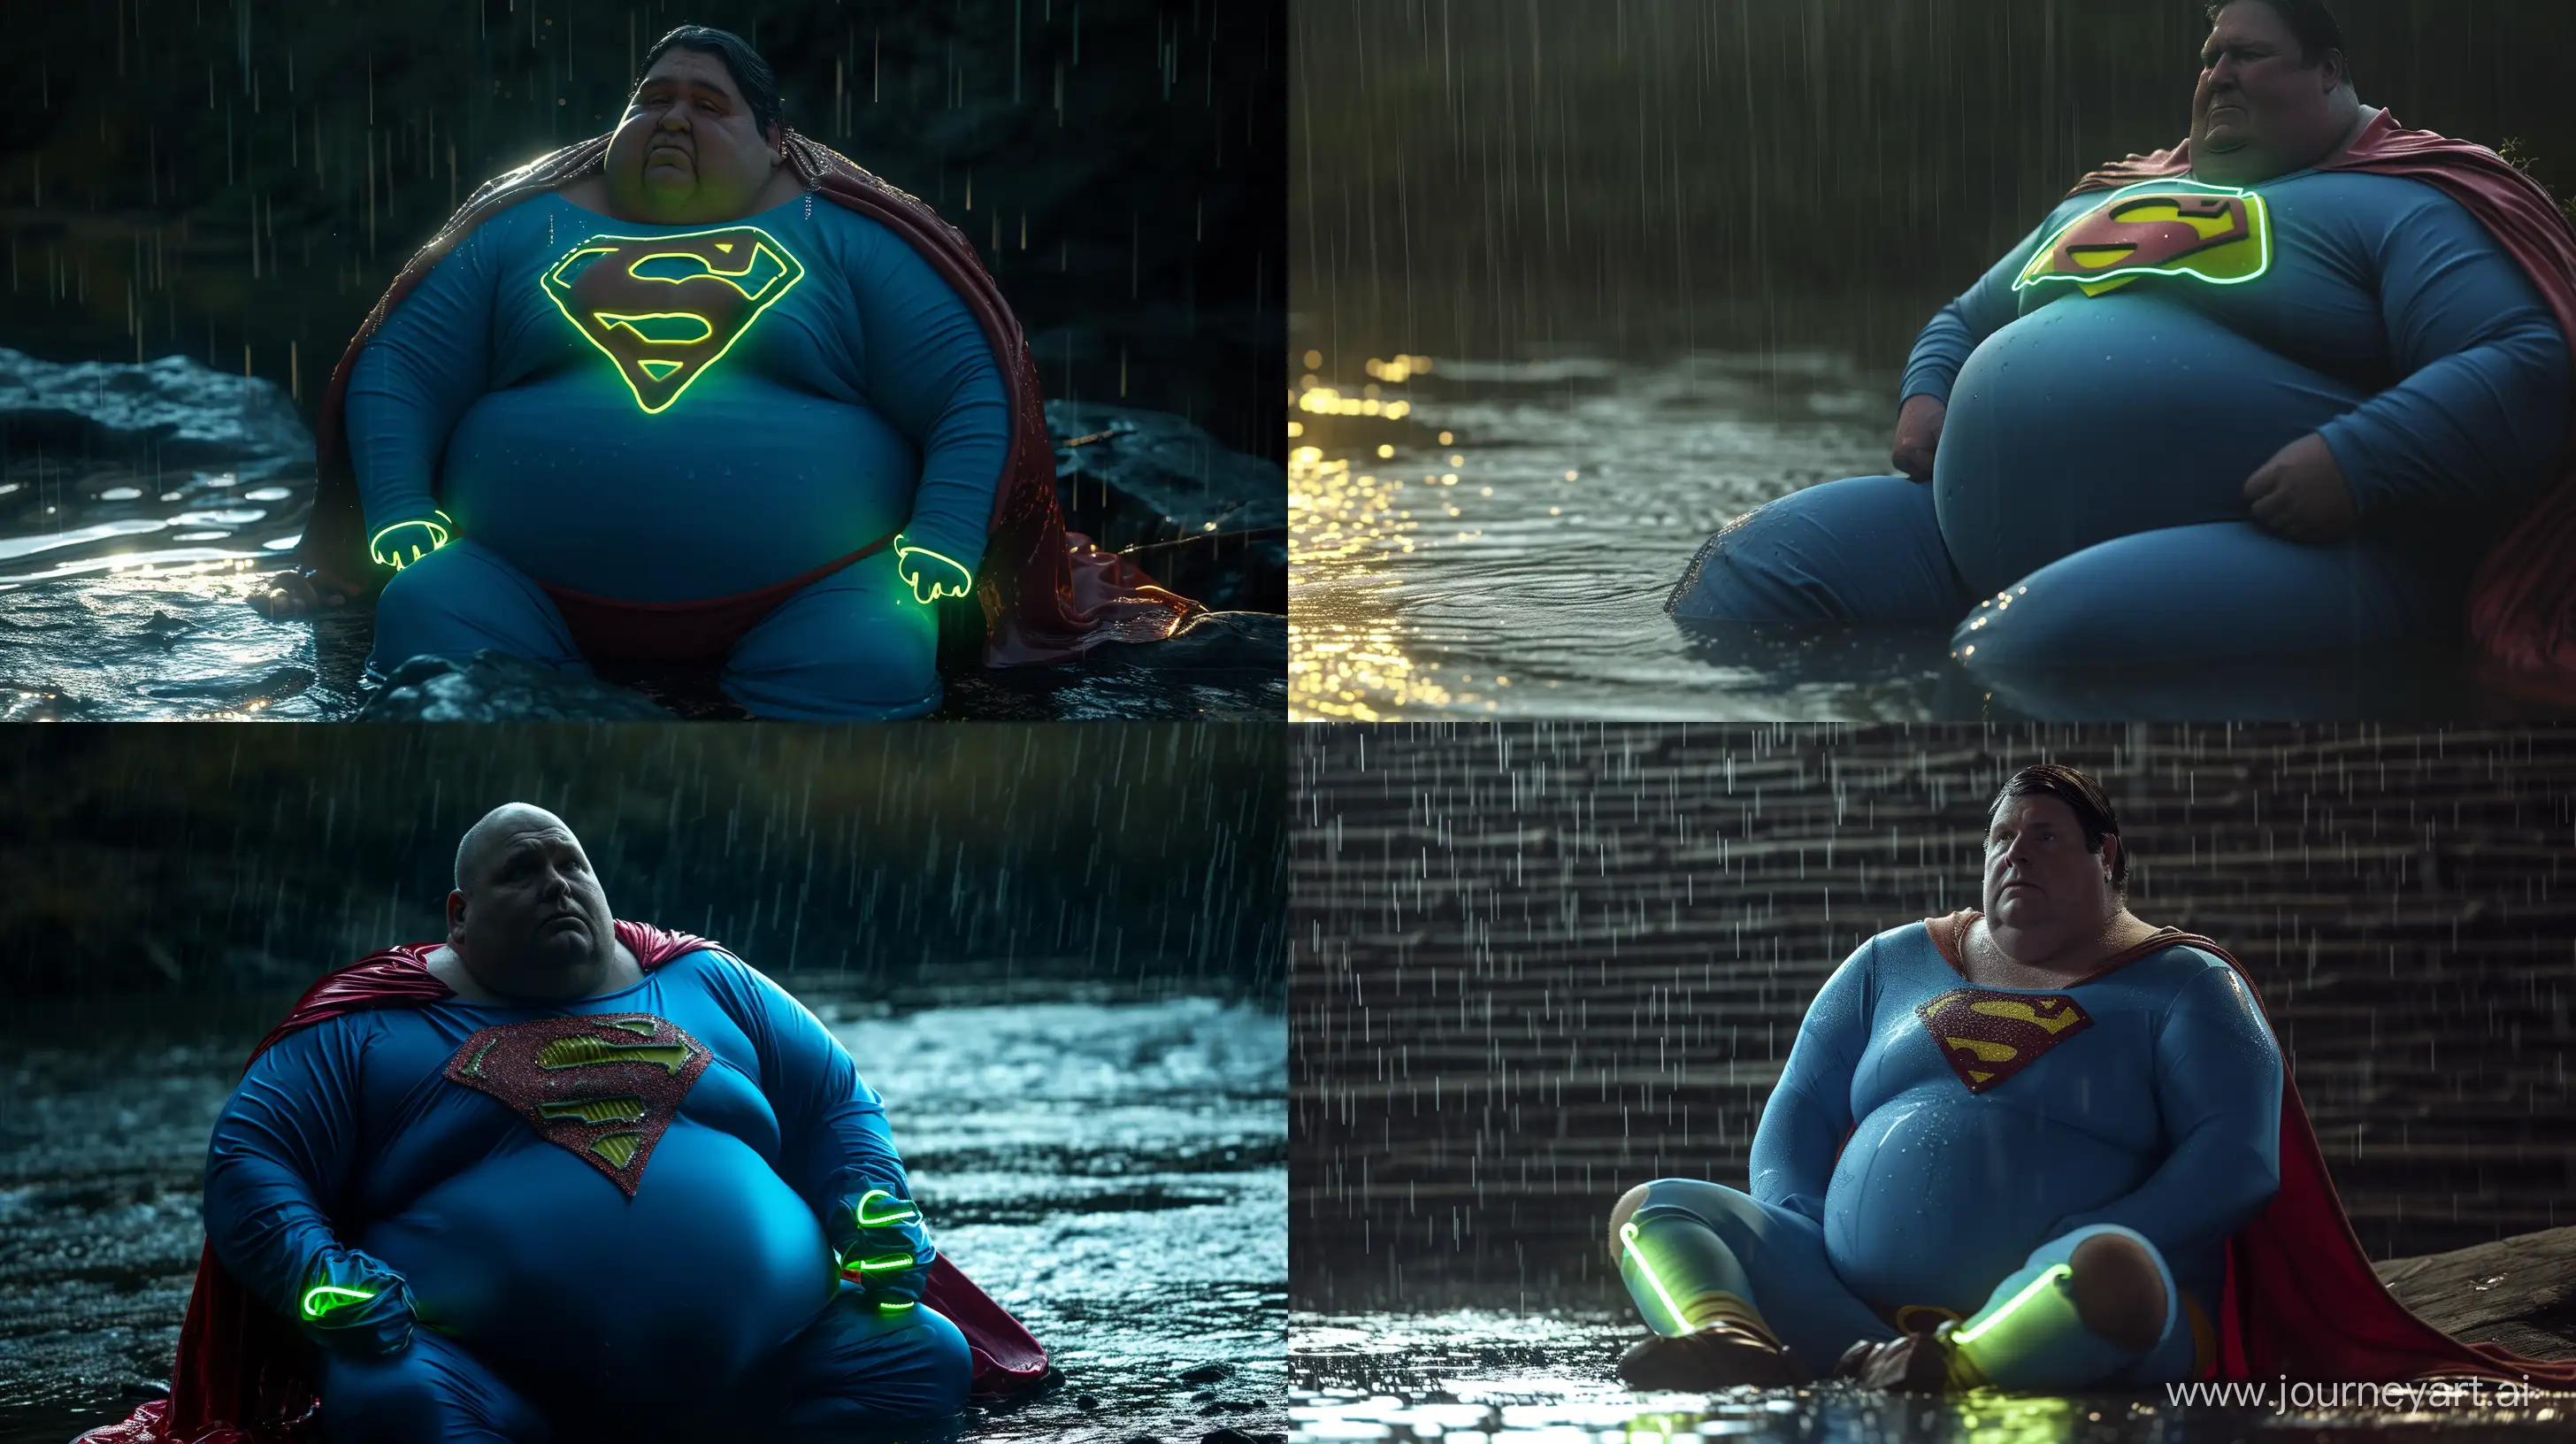 Elderly-Superman-Enjoys-Rain-by-the-River-in-Vintage-Costume